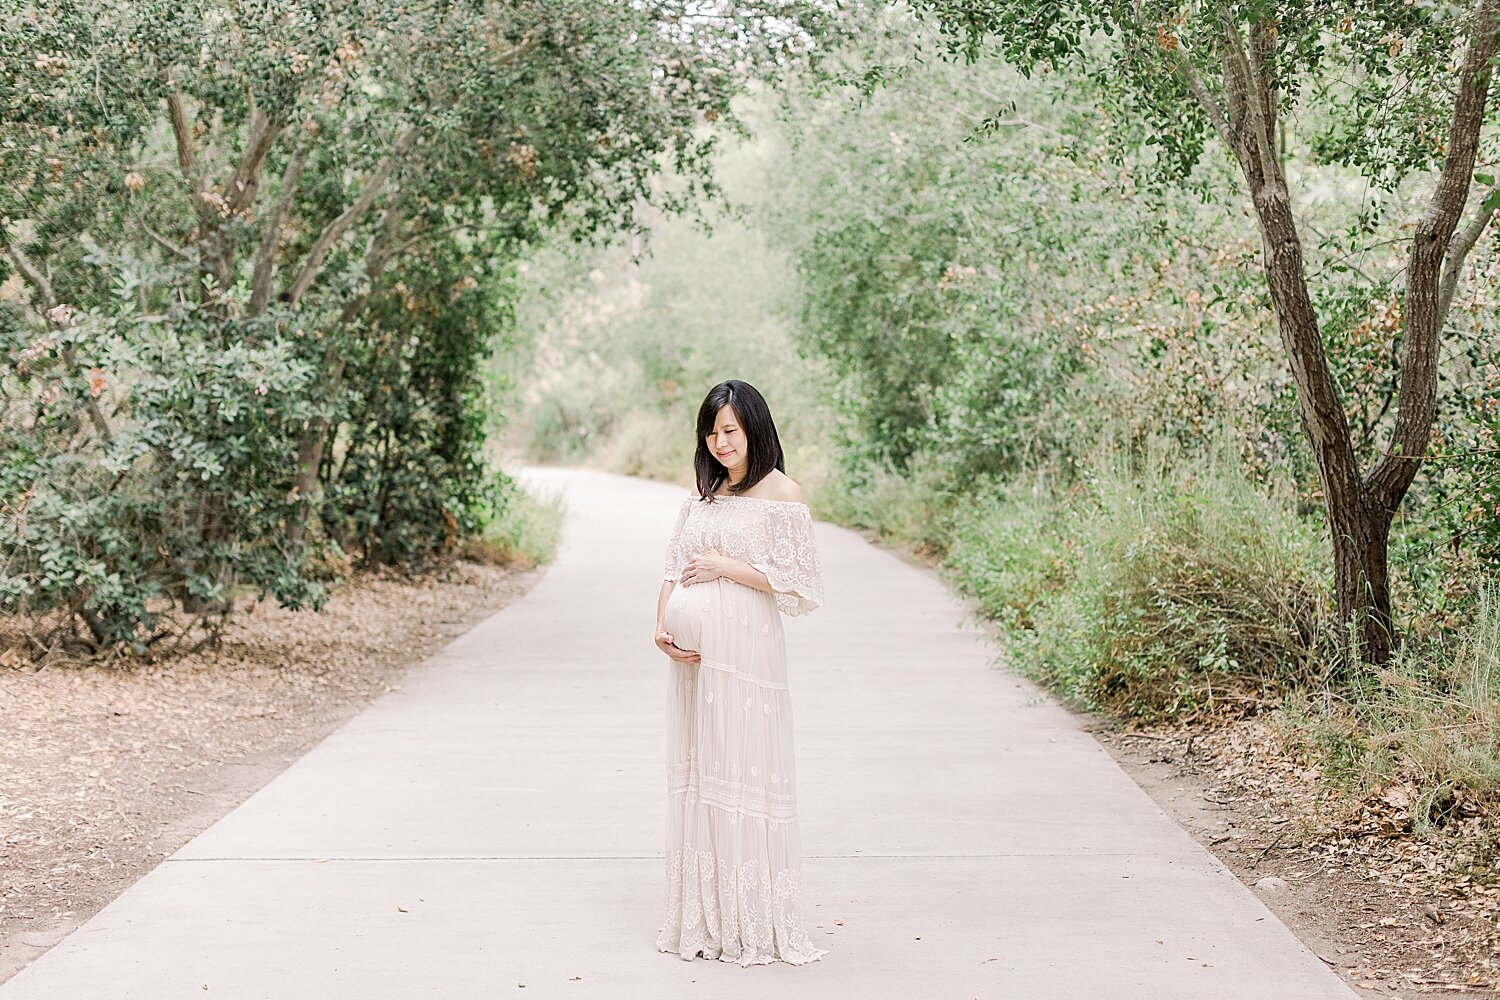 Maternity session at Serrano Creek Park in Orange County, CA. Photo by Ambre Williams Photography.